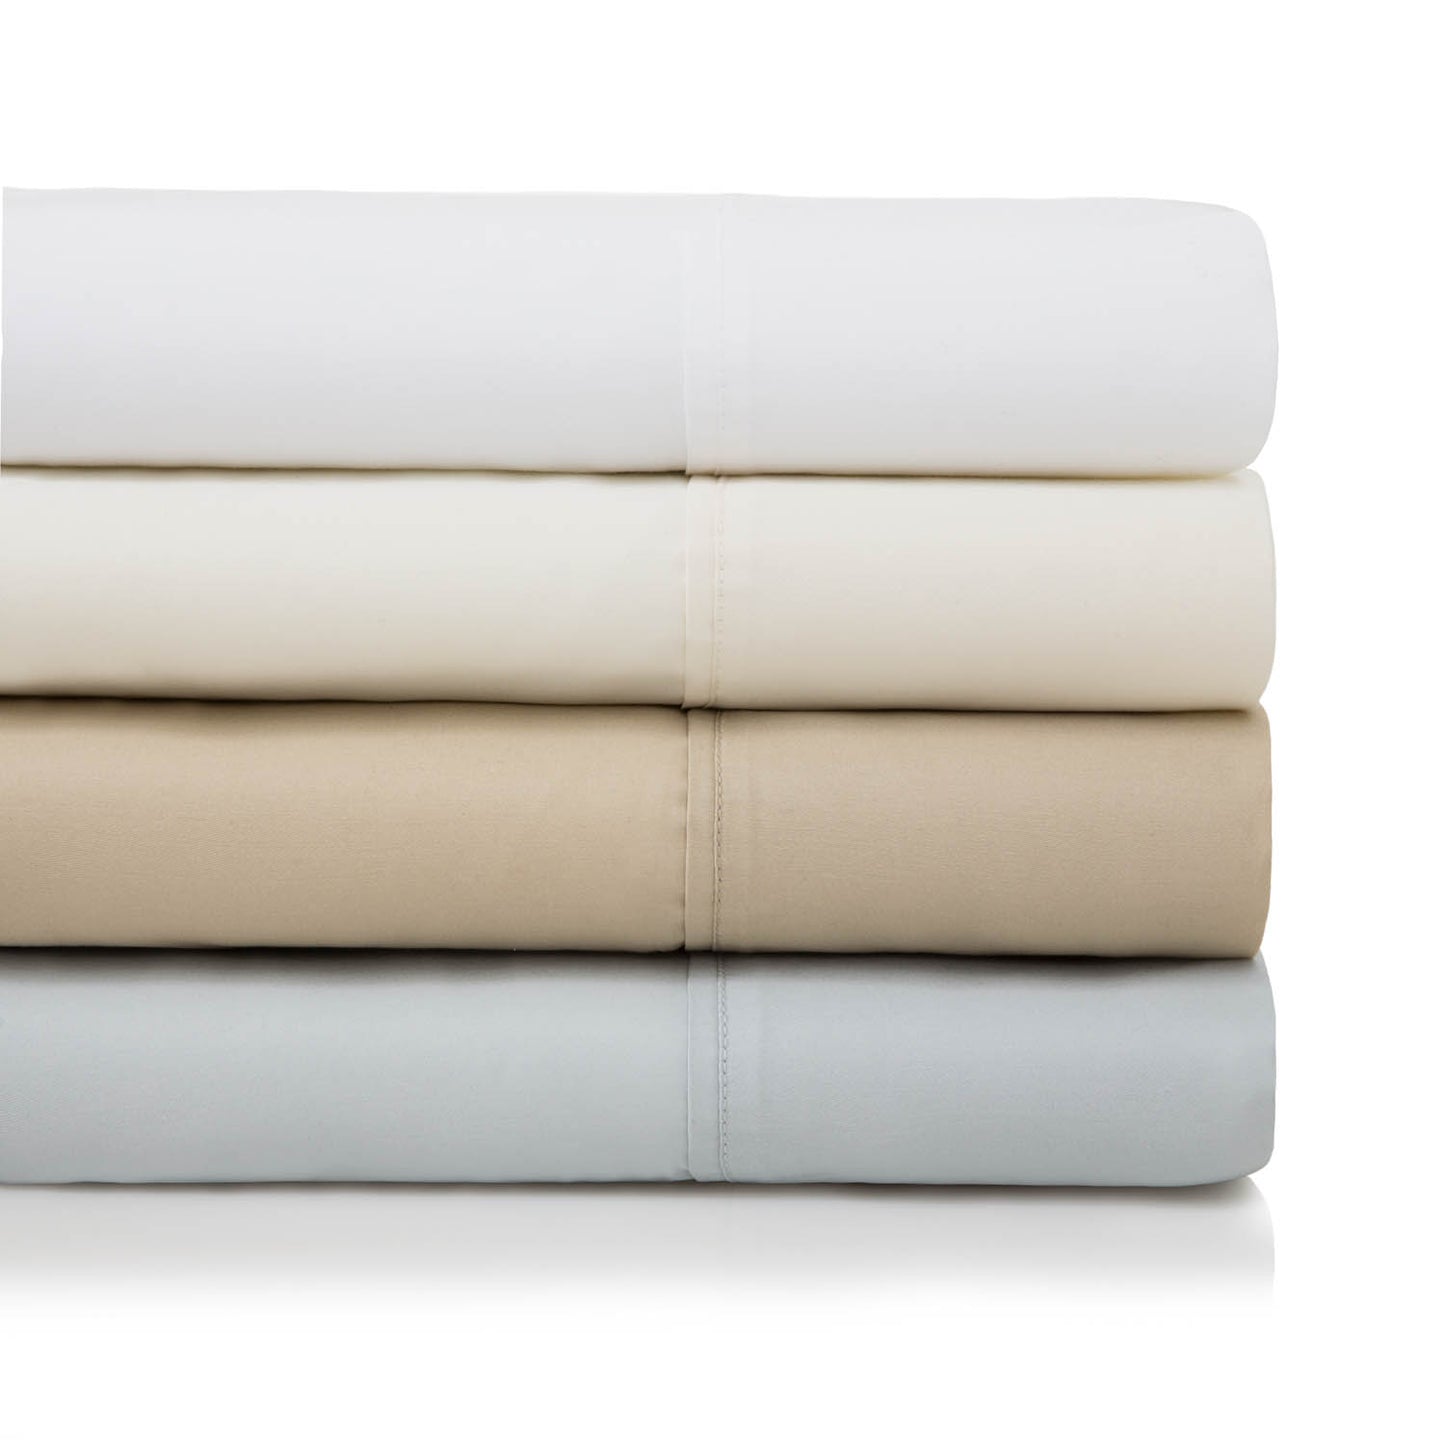 Malouf Woven 600 TC Cotton Blend Bed Sheets